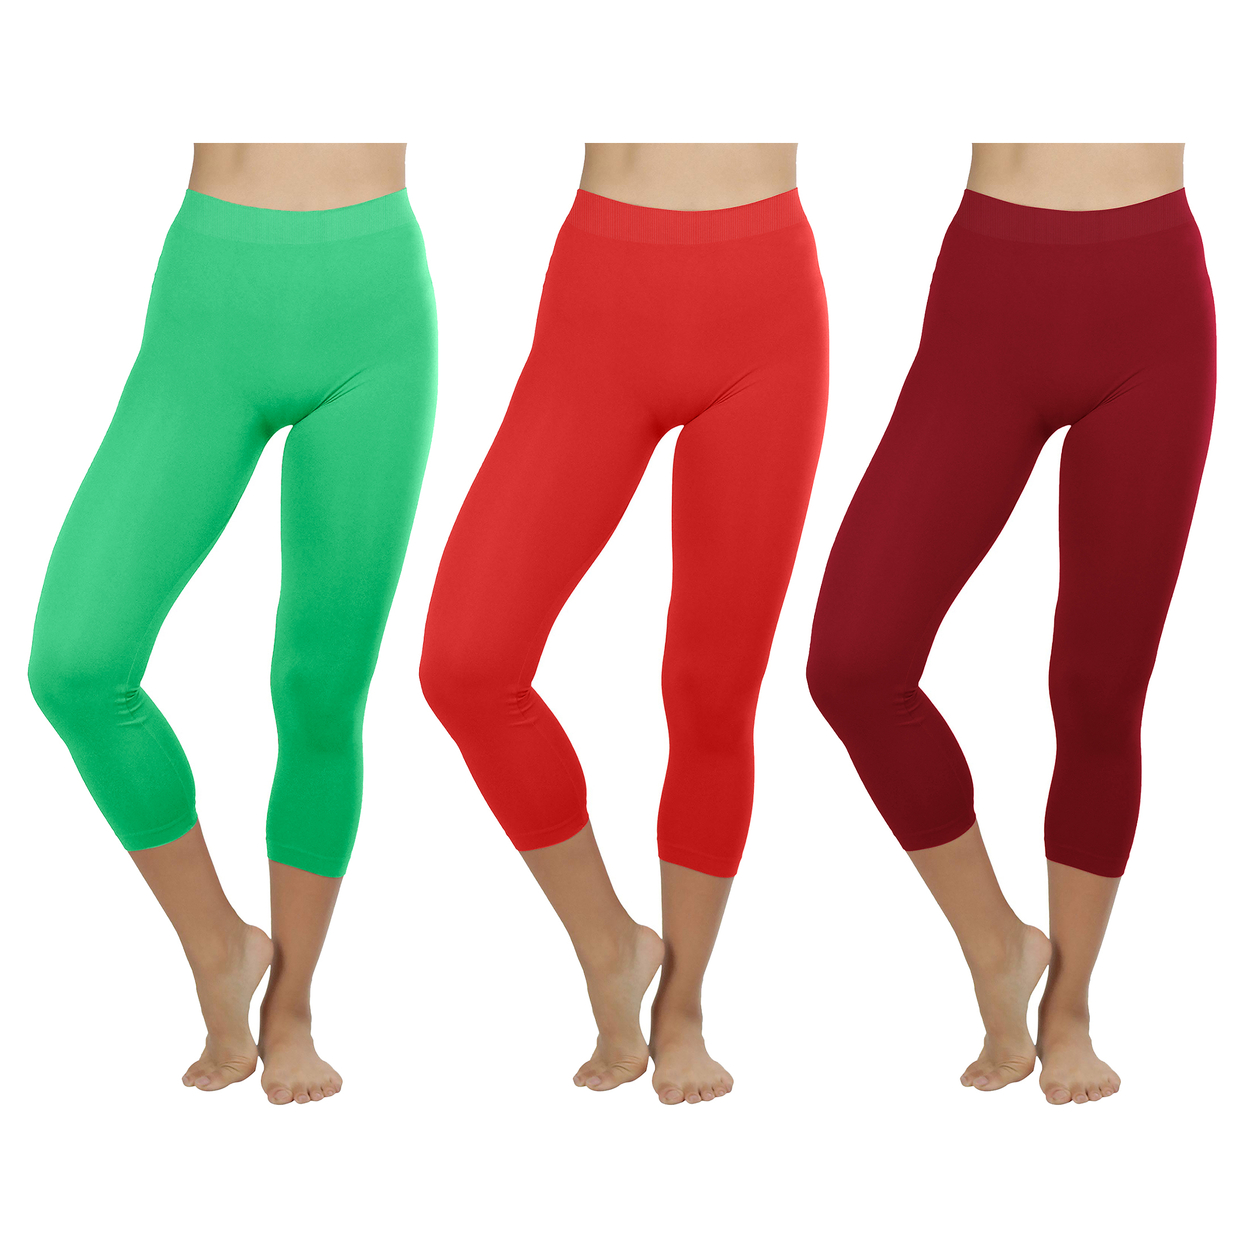 3-Pack: Women's Ultra-Soft High Waisted Smooth Stretch Active Yoga Capri Leggings - Burgundy,burgundy,burgundy, X-large